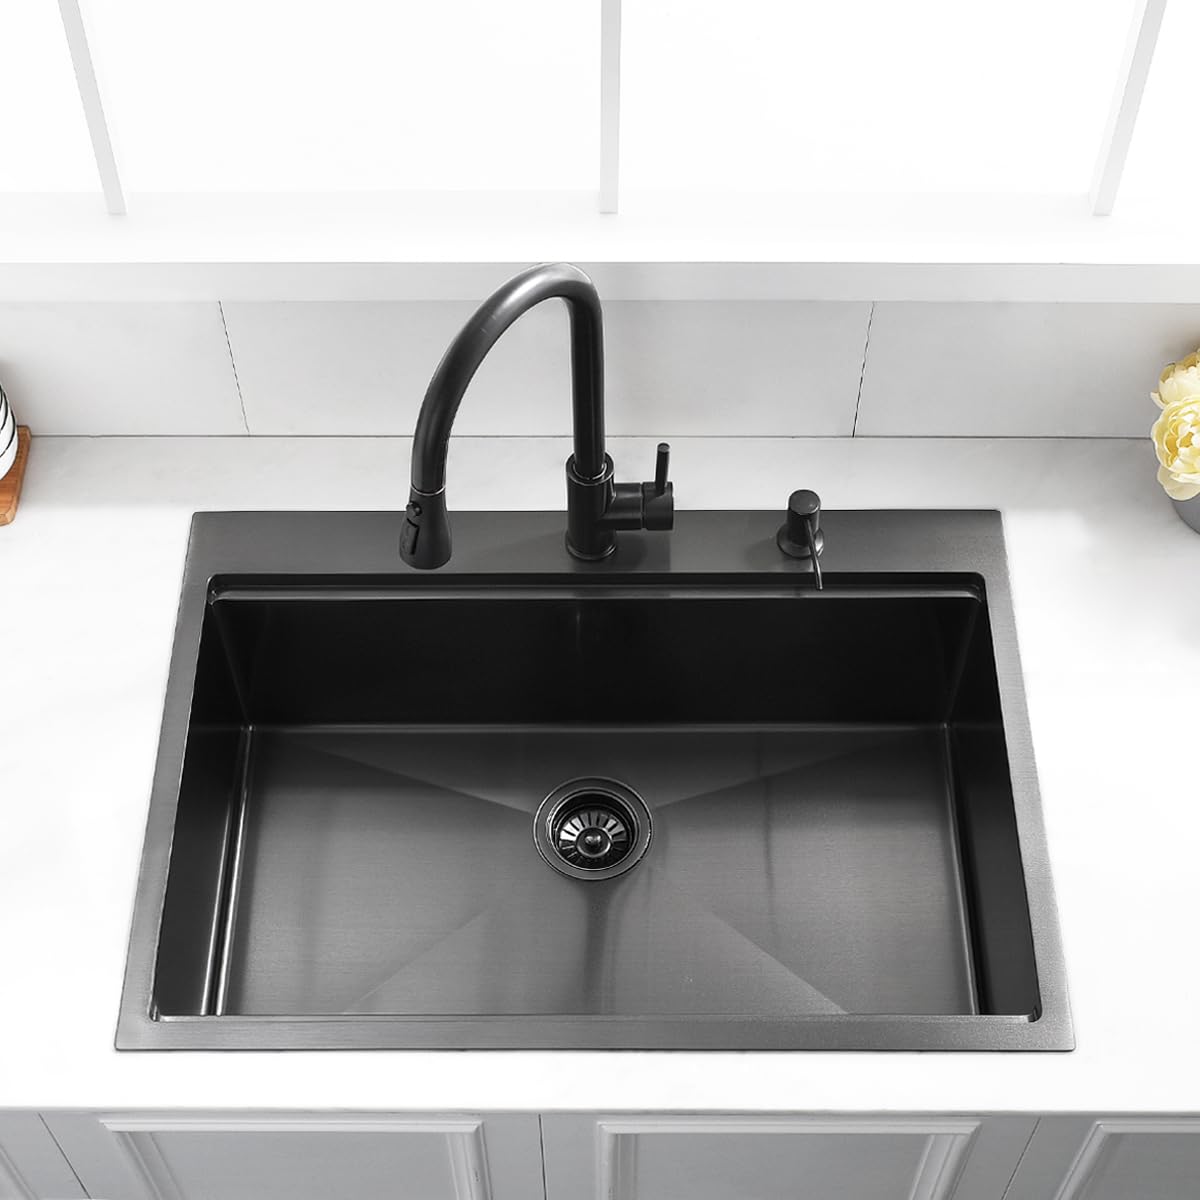 Luckyhorse 28 inch Black Drop in Kitchen Sink Farmhouse Sink with Workstation,16 Gauge Deep Black Stainless Steel Sinks for Kitchens.LH005S